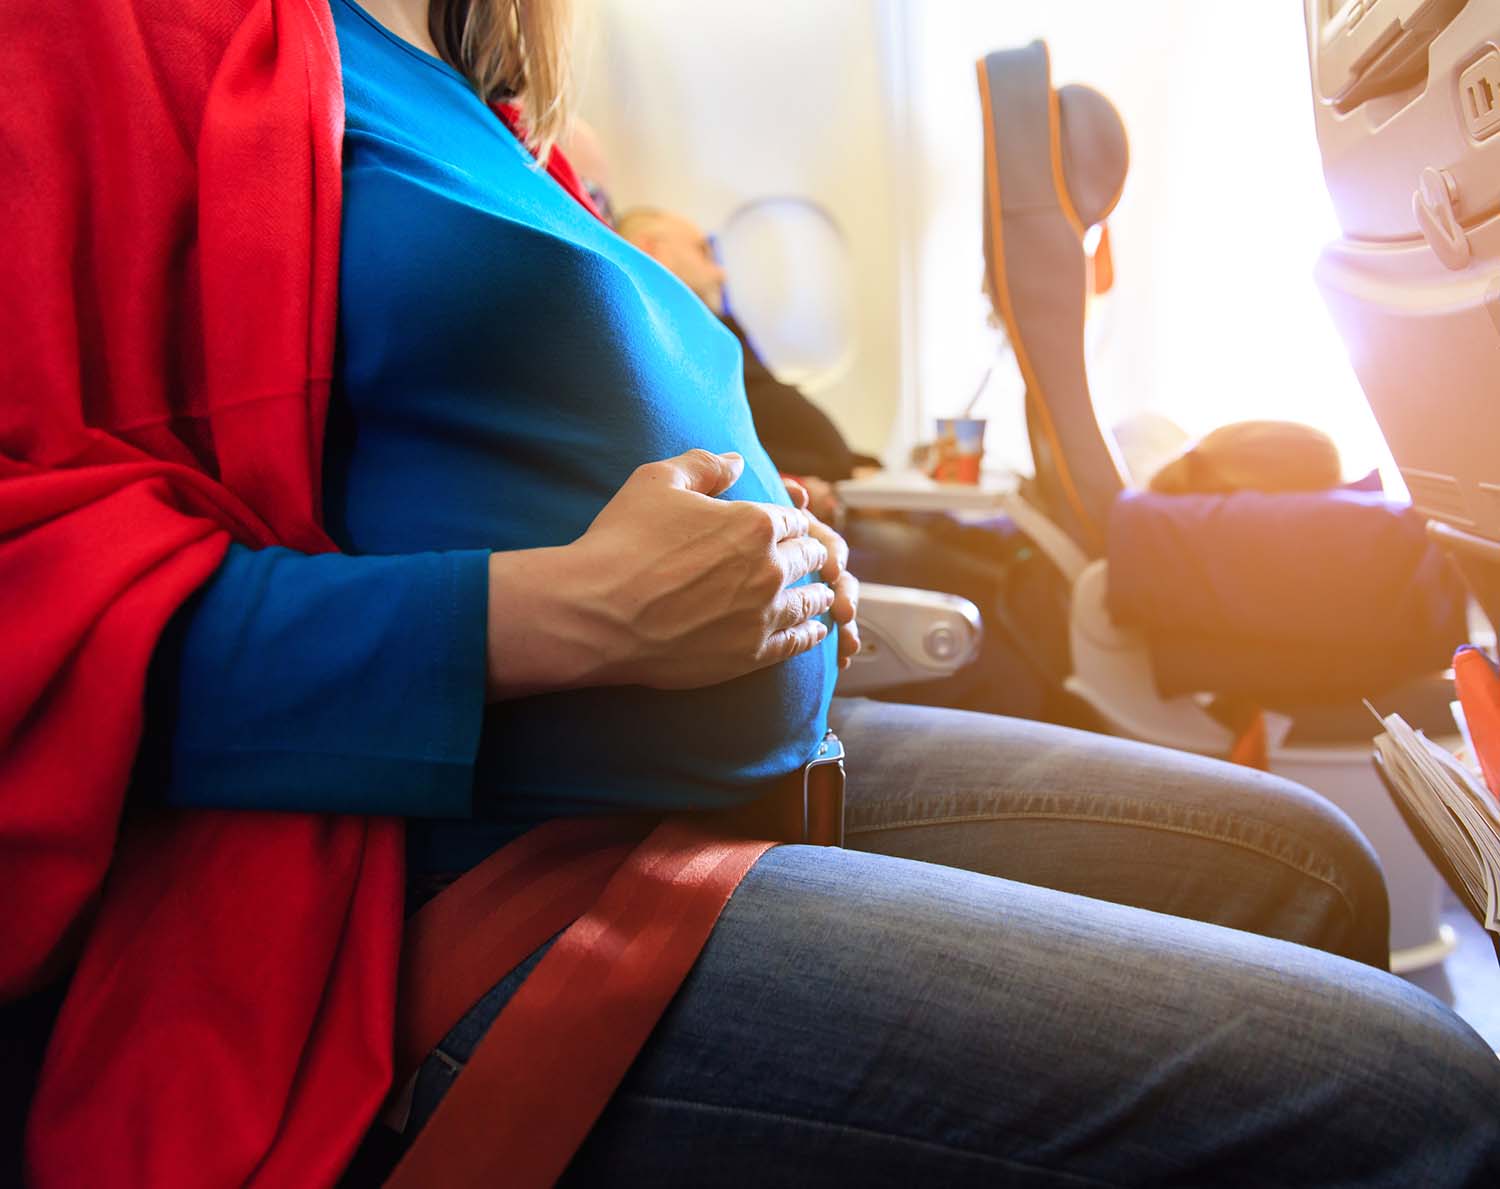 rbs travel insurance pregnancy